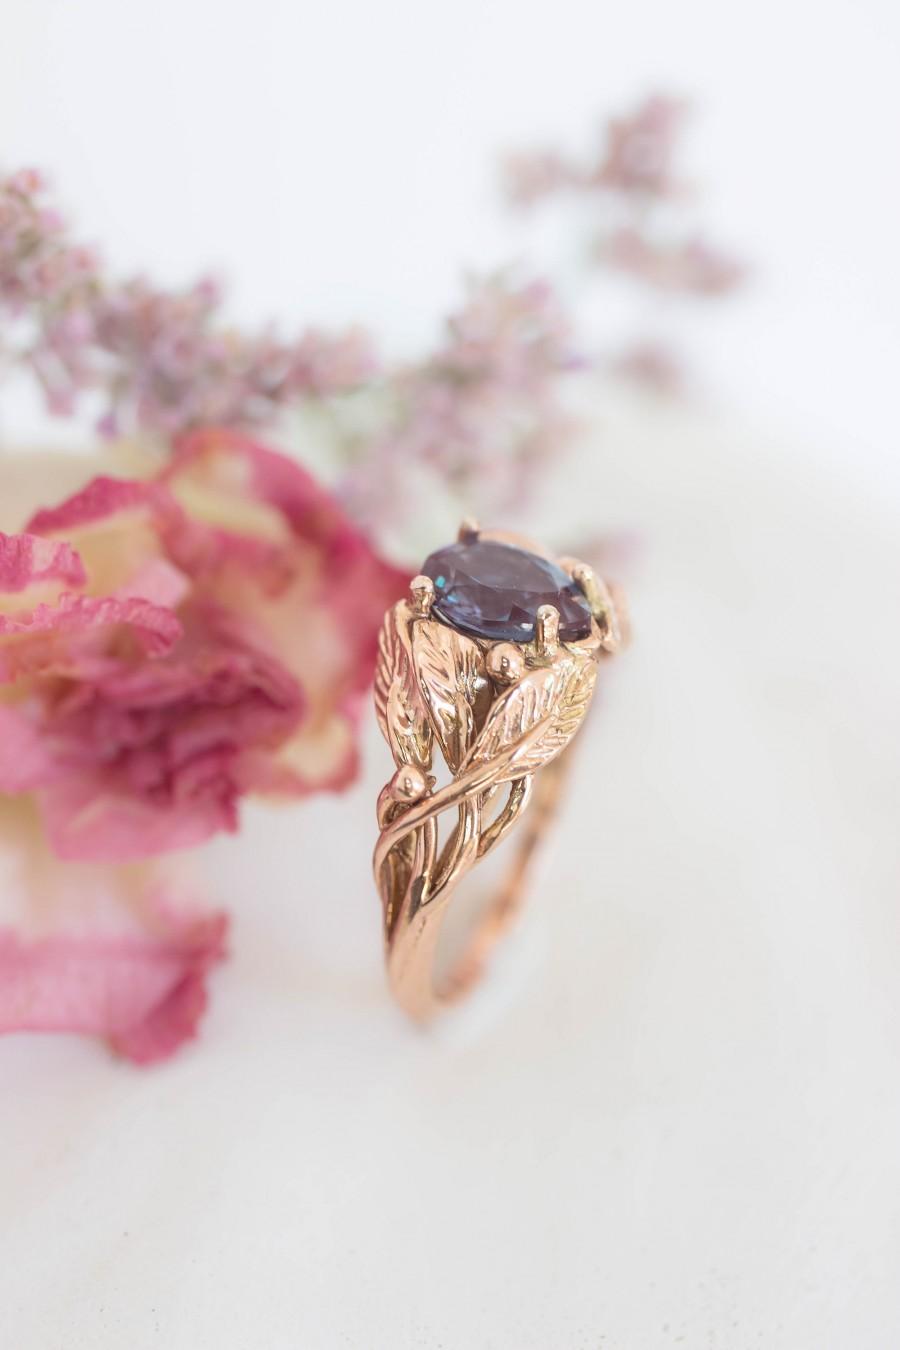 زفاف - Pear cut alexandrite engagement ring, wedding ring for woman, leaves ring, nature jewelry, leaf ring, teardrop ring, colour change, 14K gold